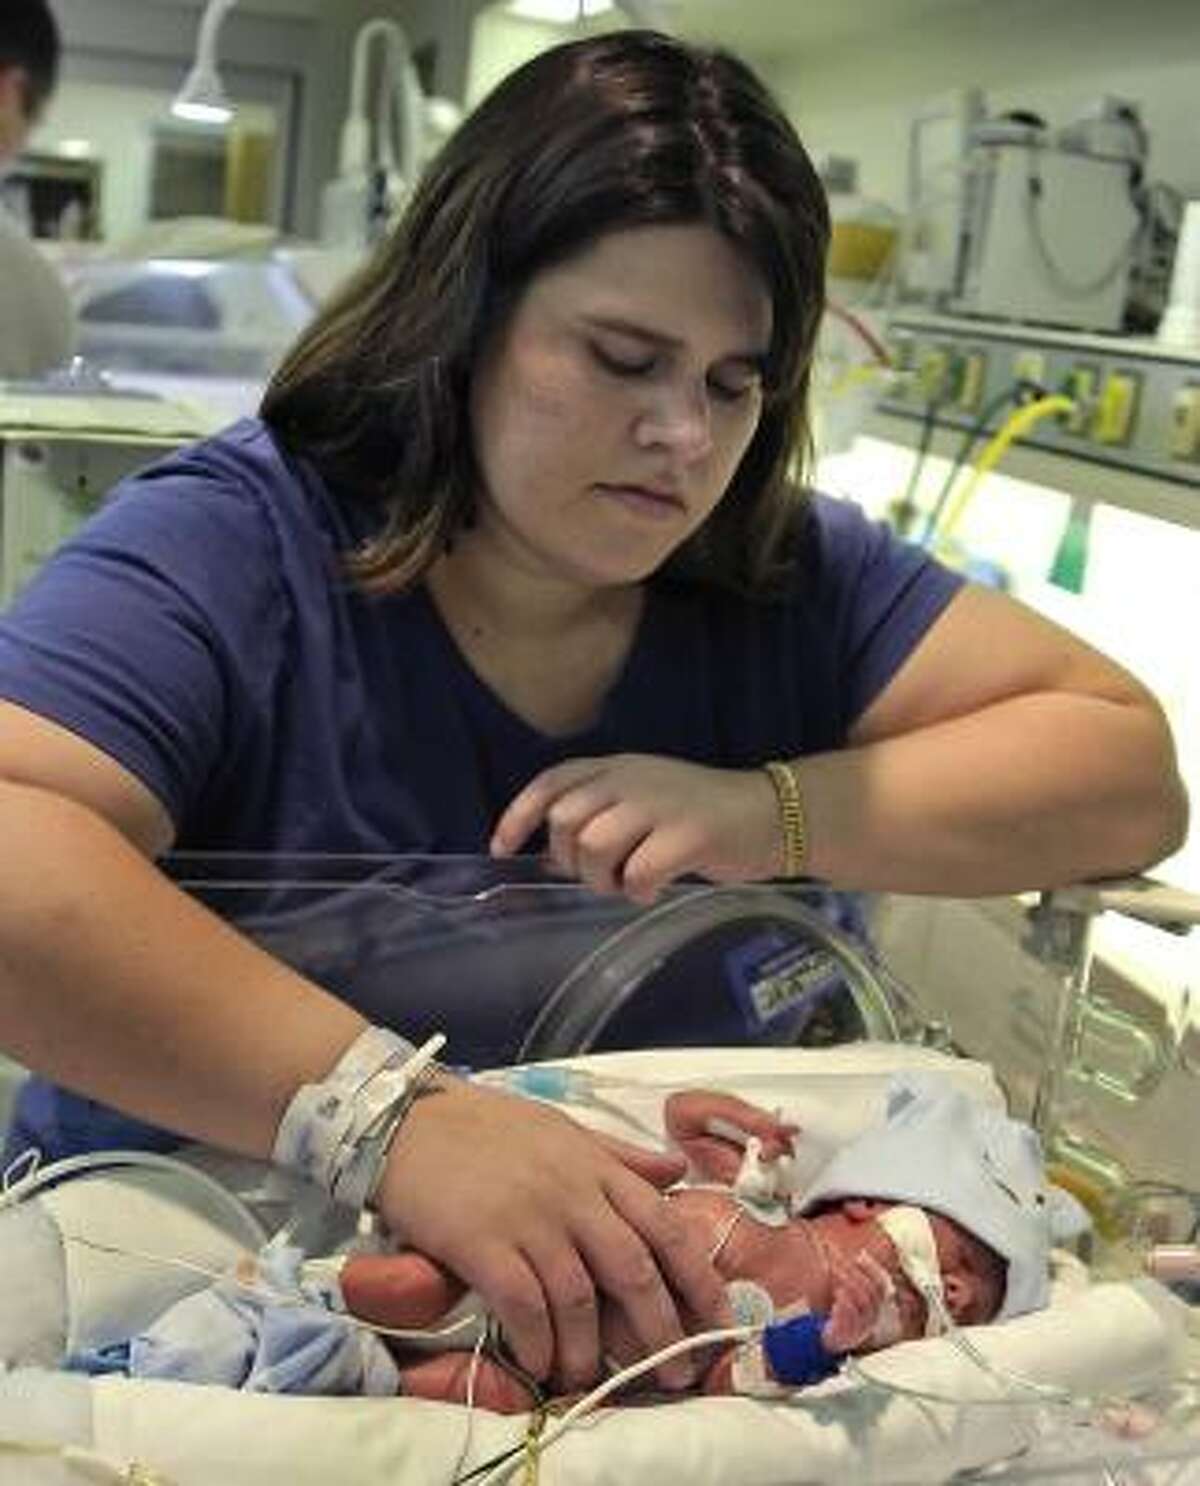 Karoline Byler looks at her newborn son Jackson.